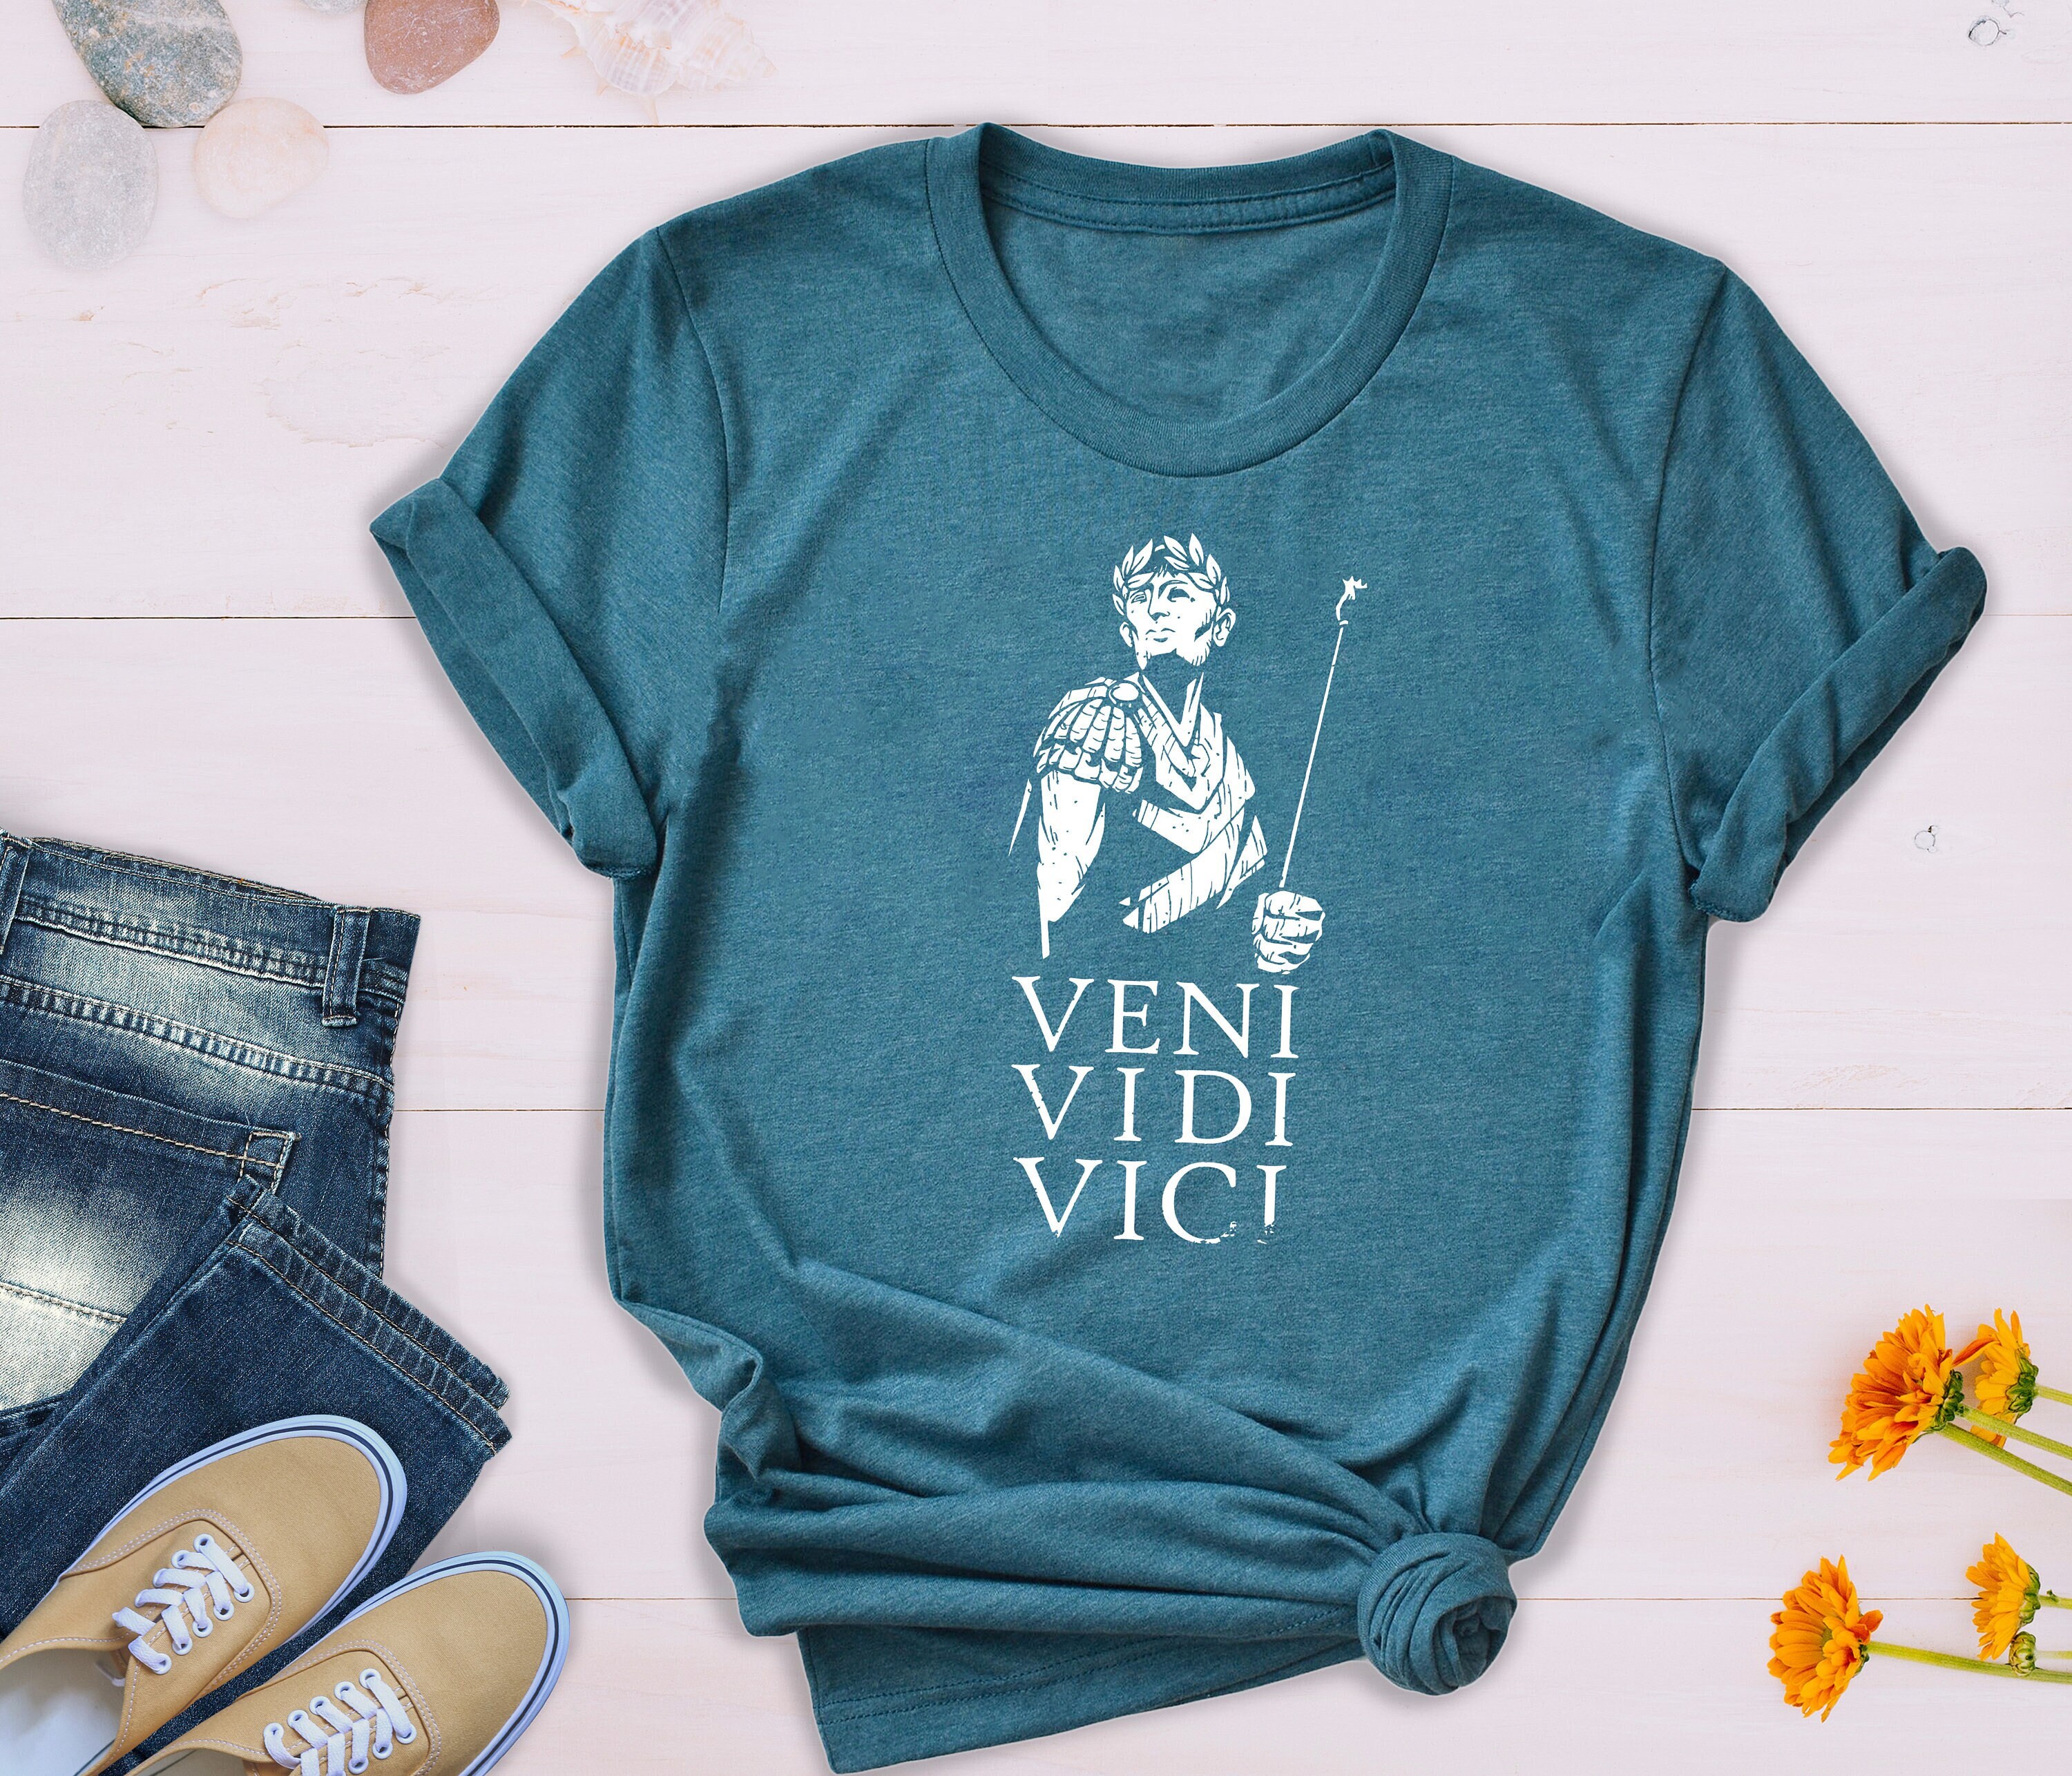 1 LEFT Vidi Vici Veni men's Humor T-shirt -  Israel